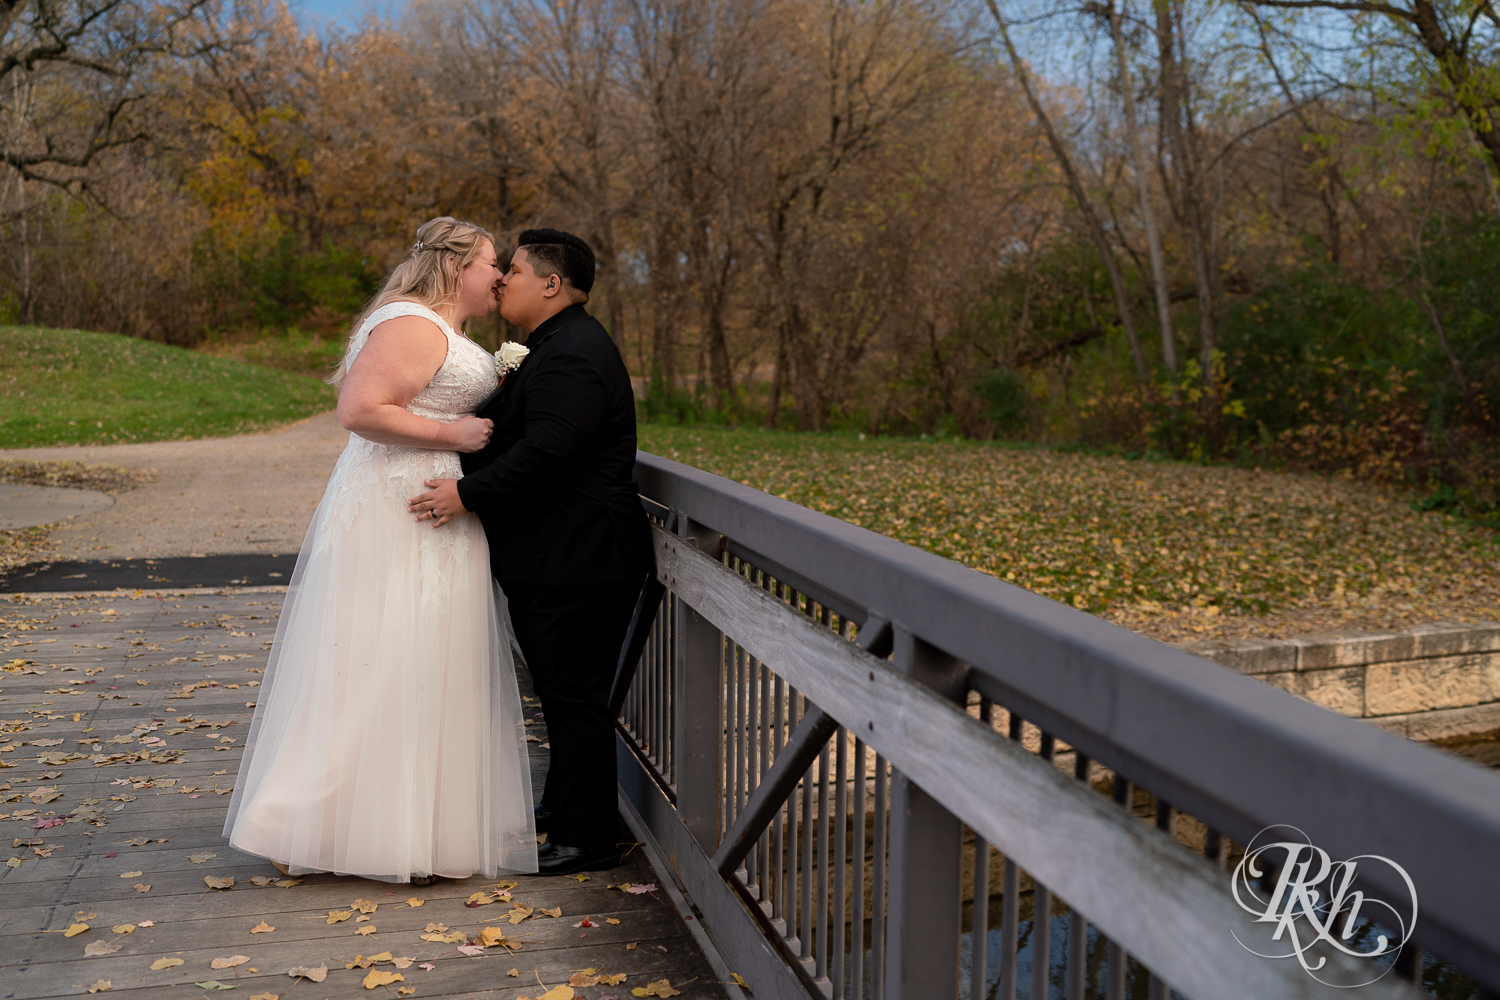 Lesbian brides kiss in fall leaves at the Eagan Community Center in Eagan, Minnesota.